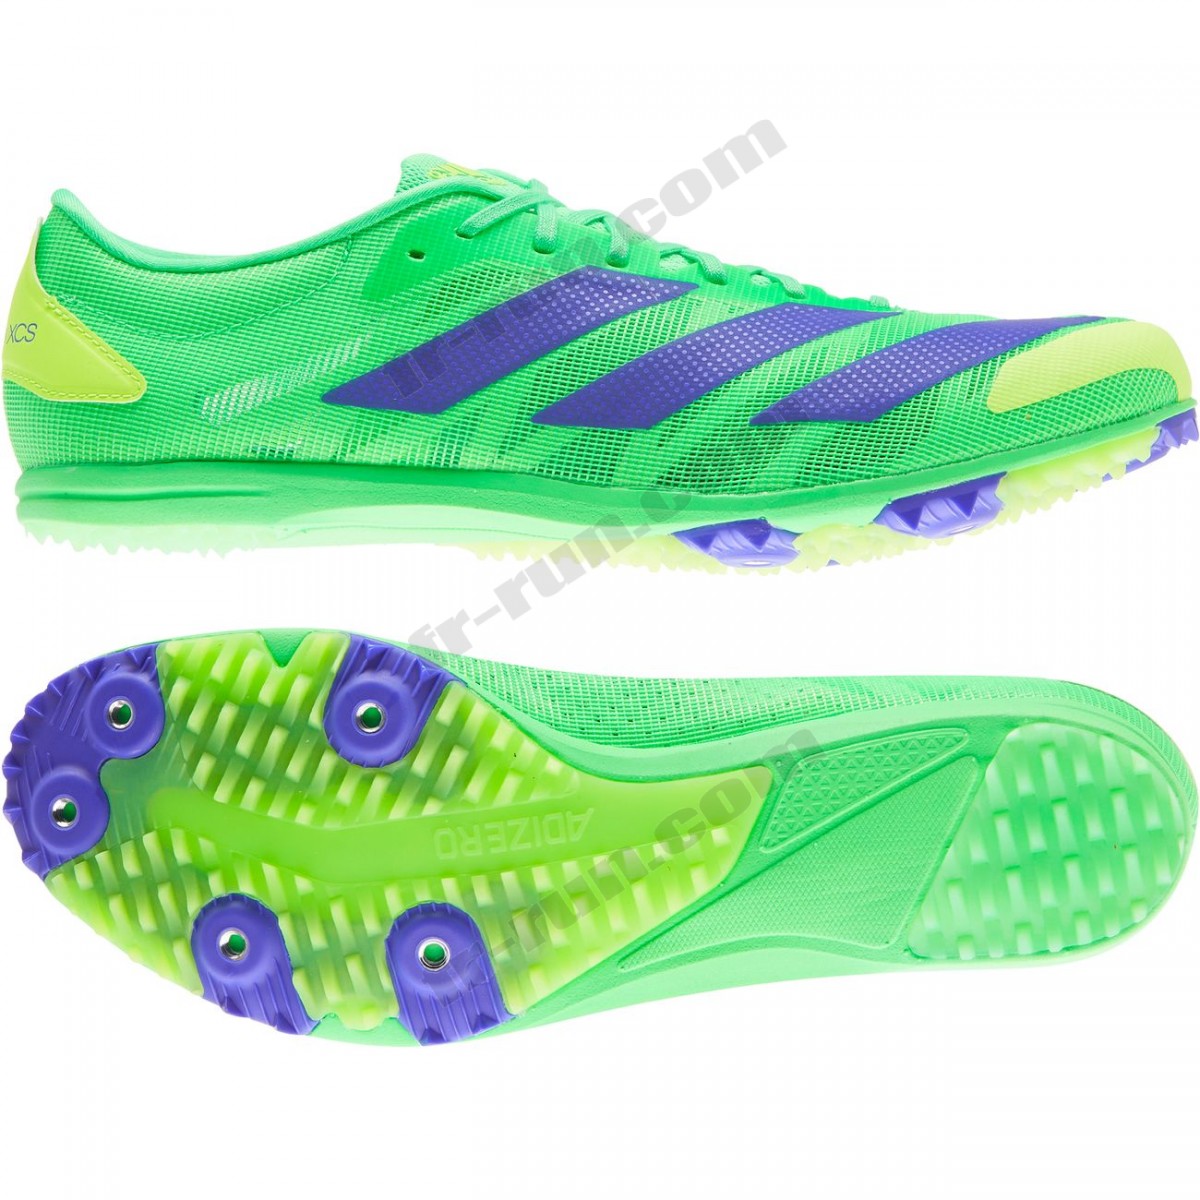 Adidas/Athlétisme adulte ADIDAS Chaussures adidas Adizero XCS √ Nouveau style √ Soldes - -4